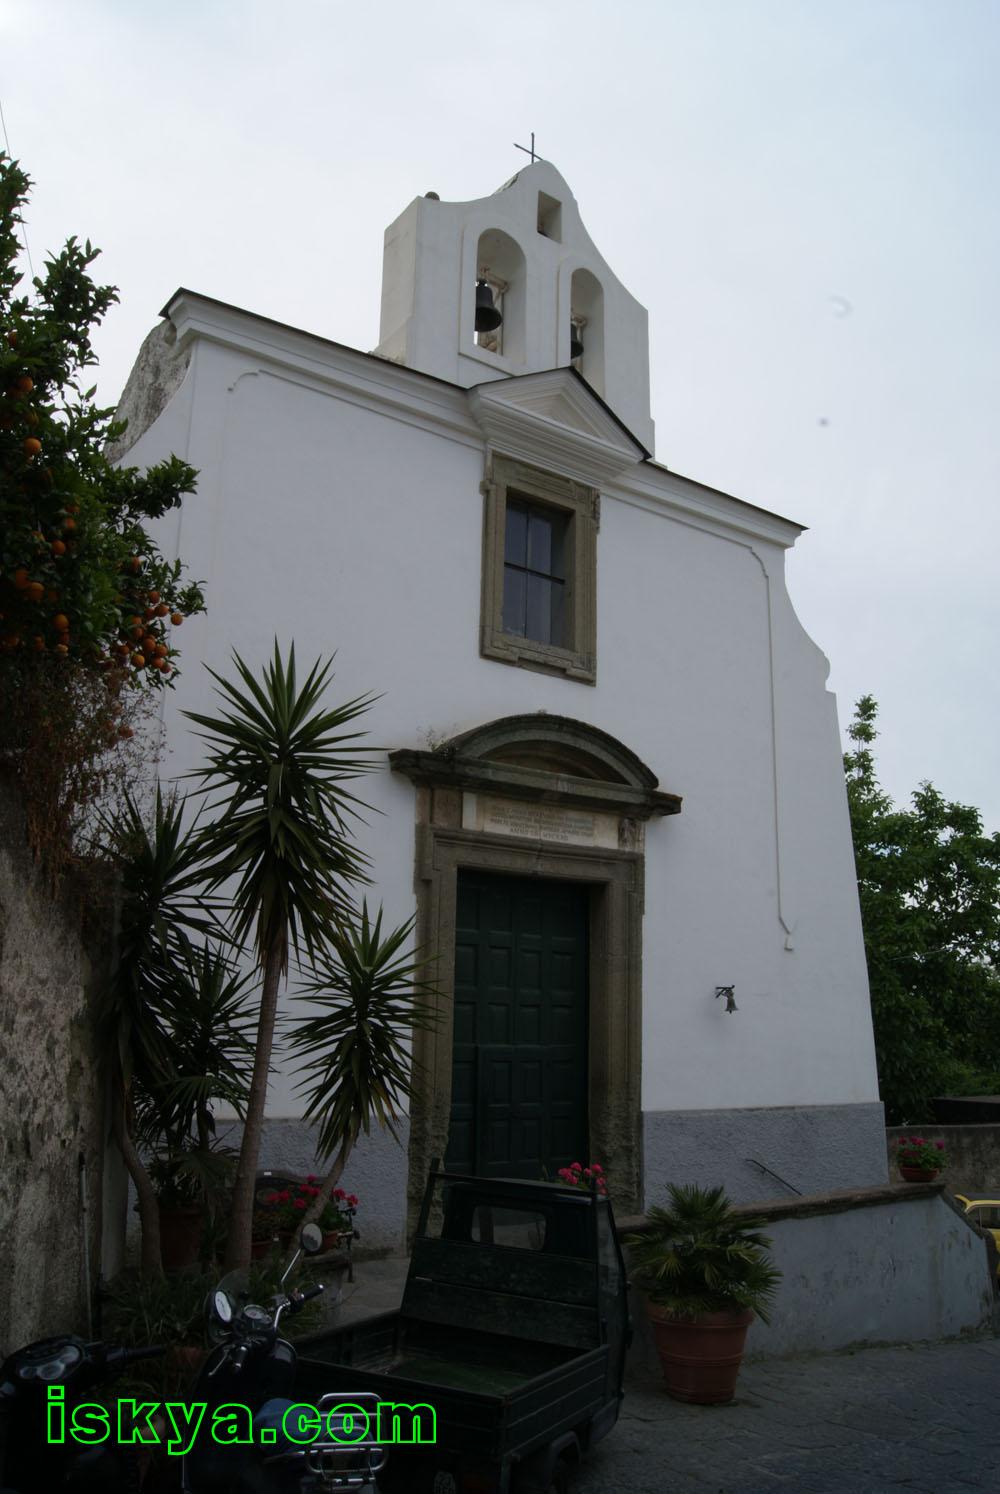 Chiesa San Carlo Borromeo